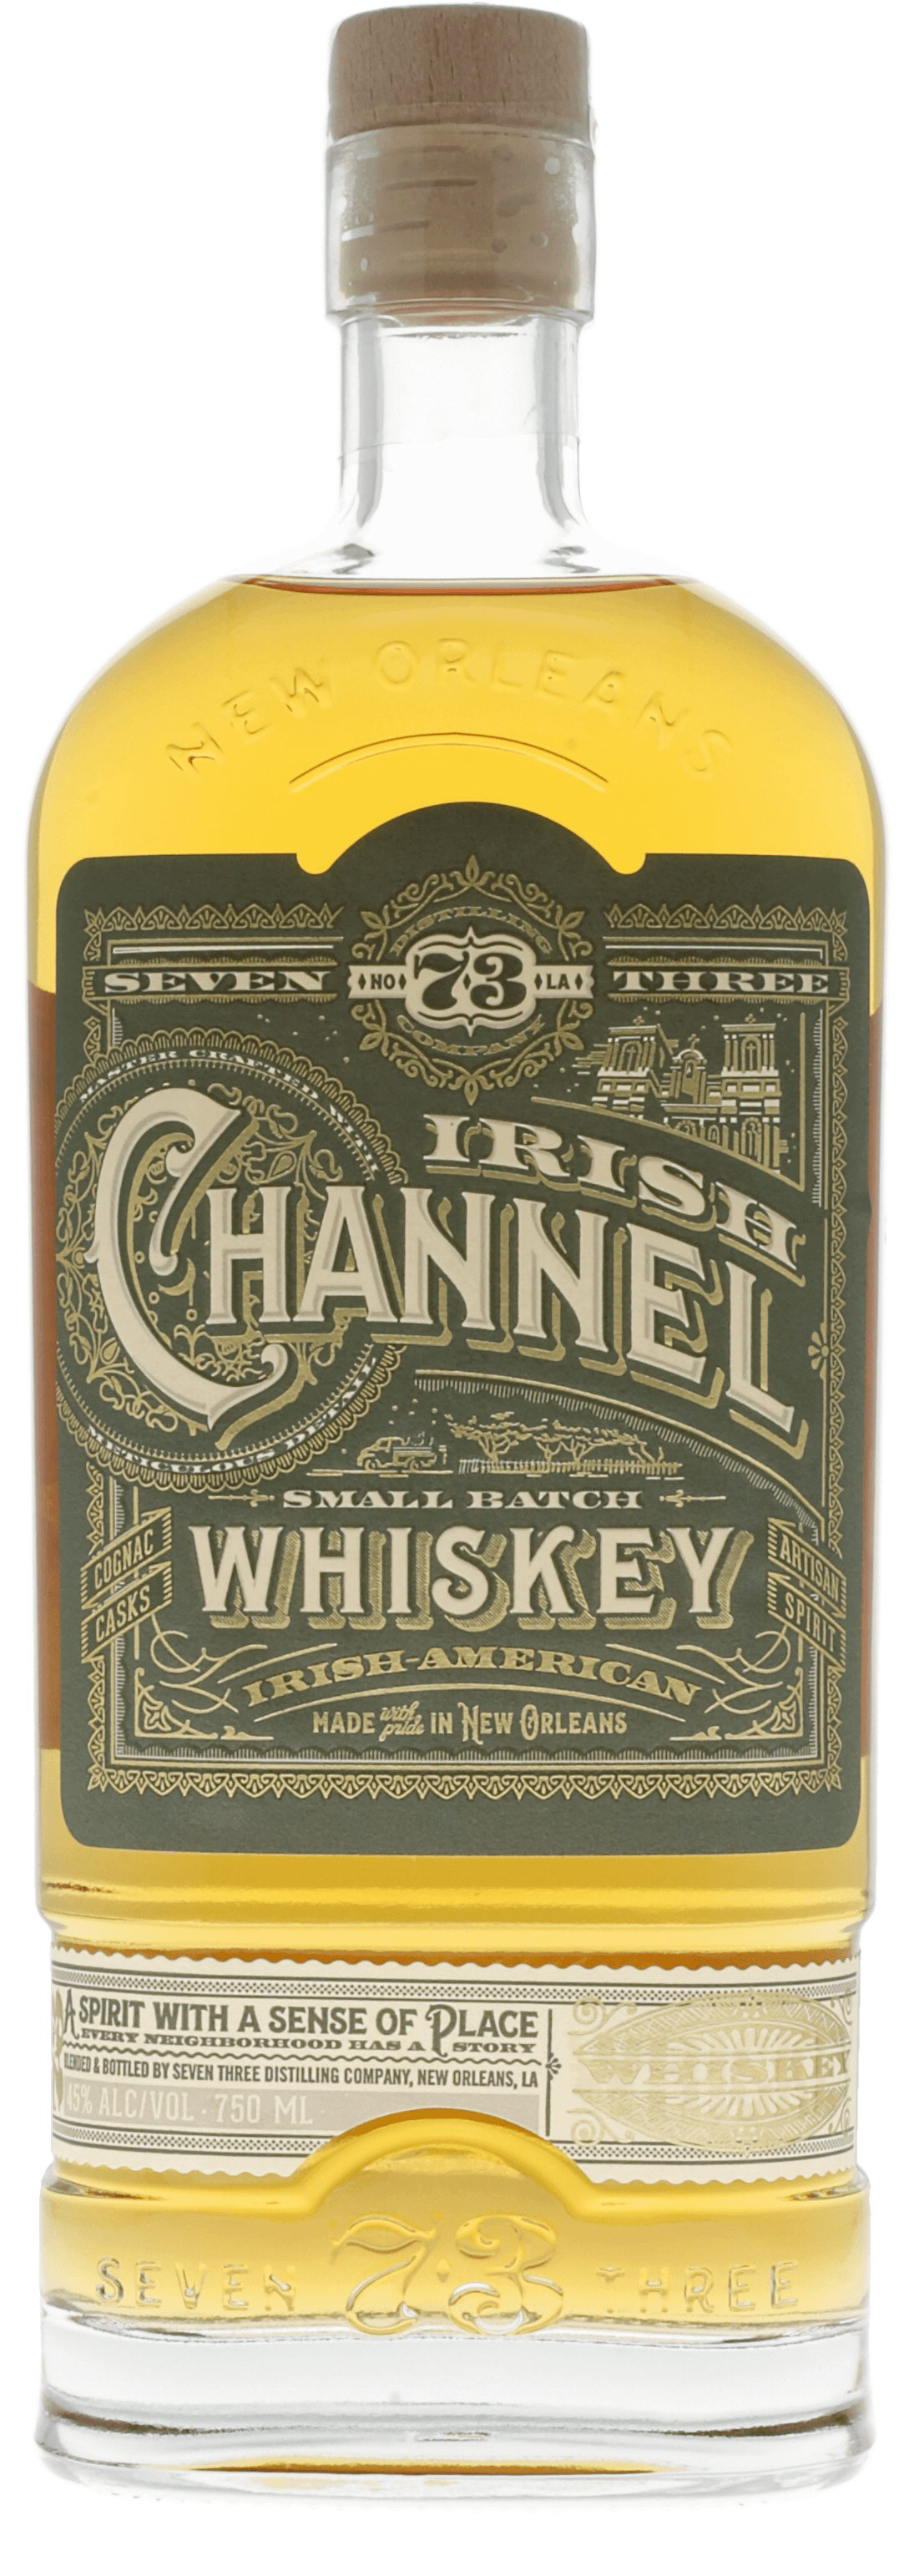 Irish Channel Whiskey